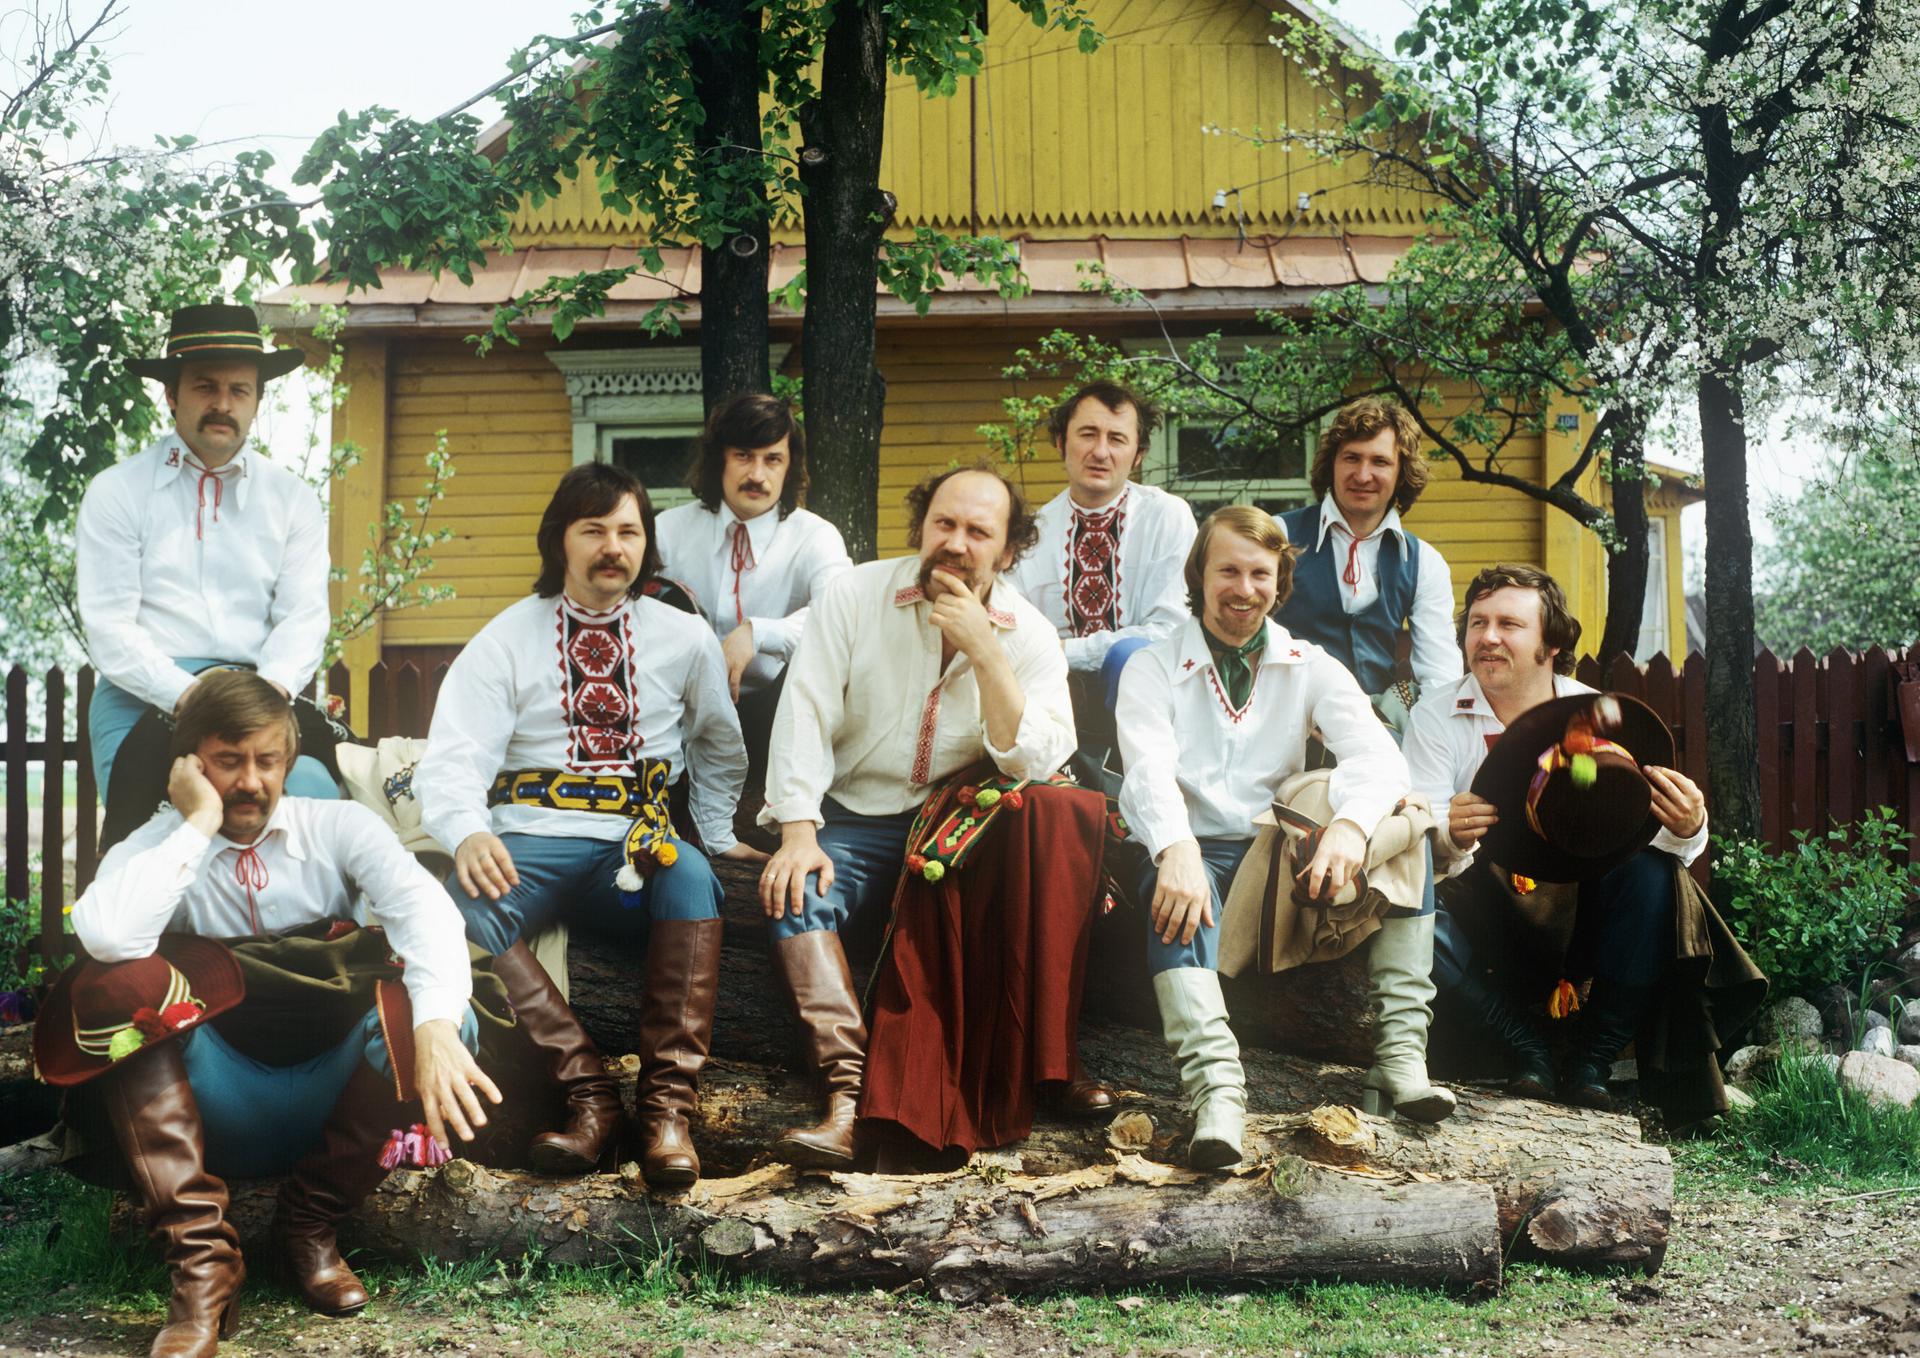 Песняры состав 1976 с фото имена